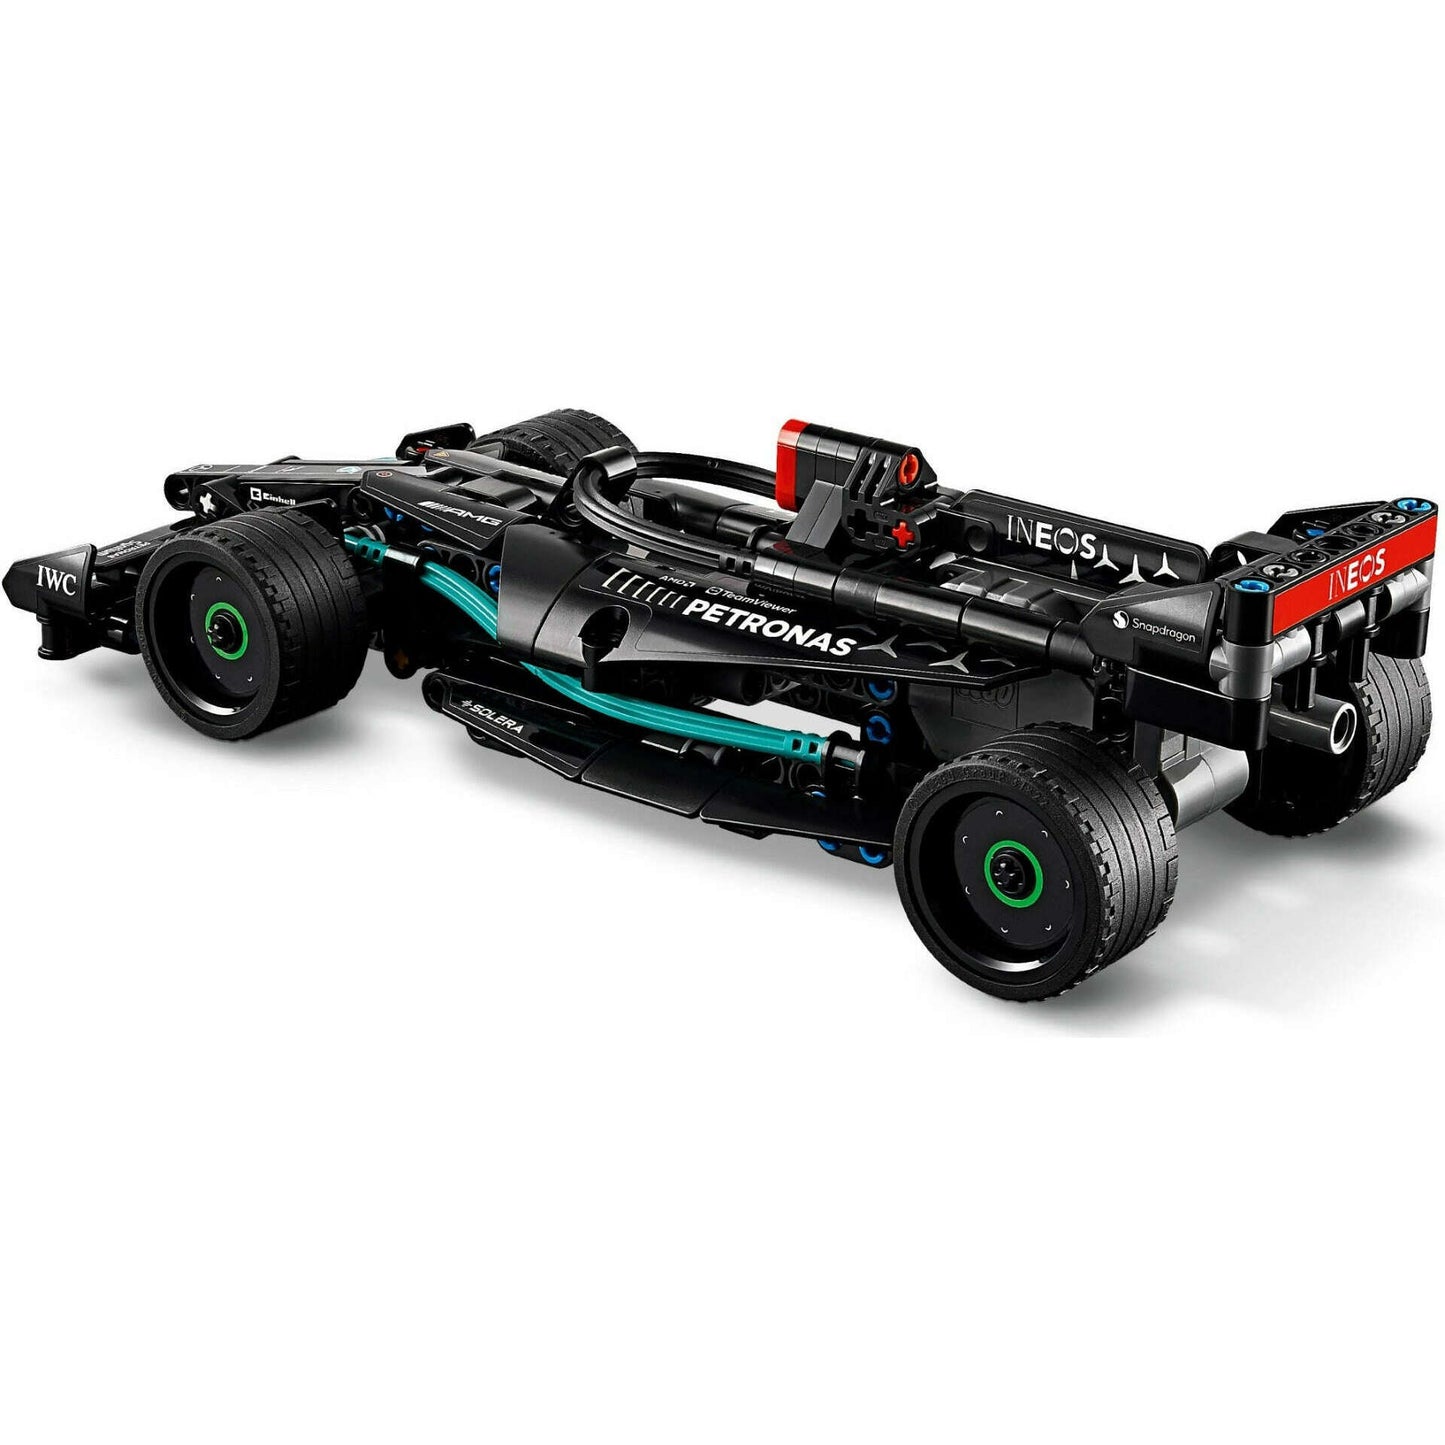 Toys N Tuck:Lego 42165 Technic Mercedes-AMG F1 W14 E Performance Pull-Back,Lego Technic